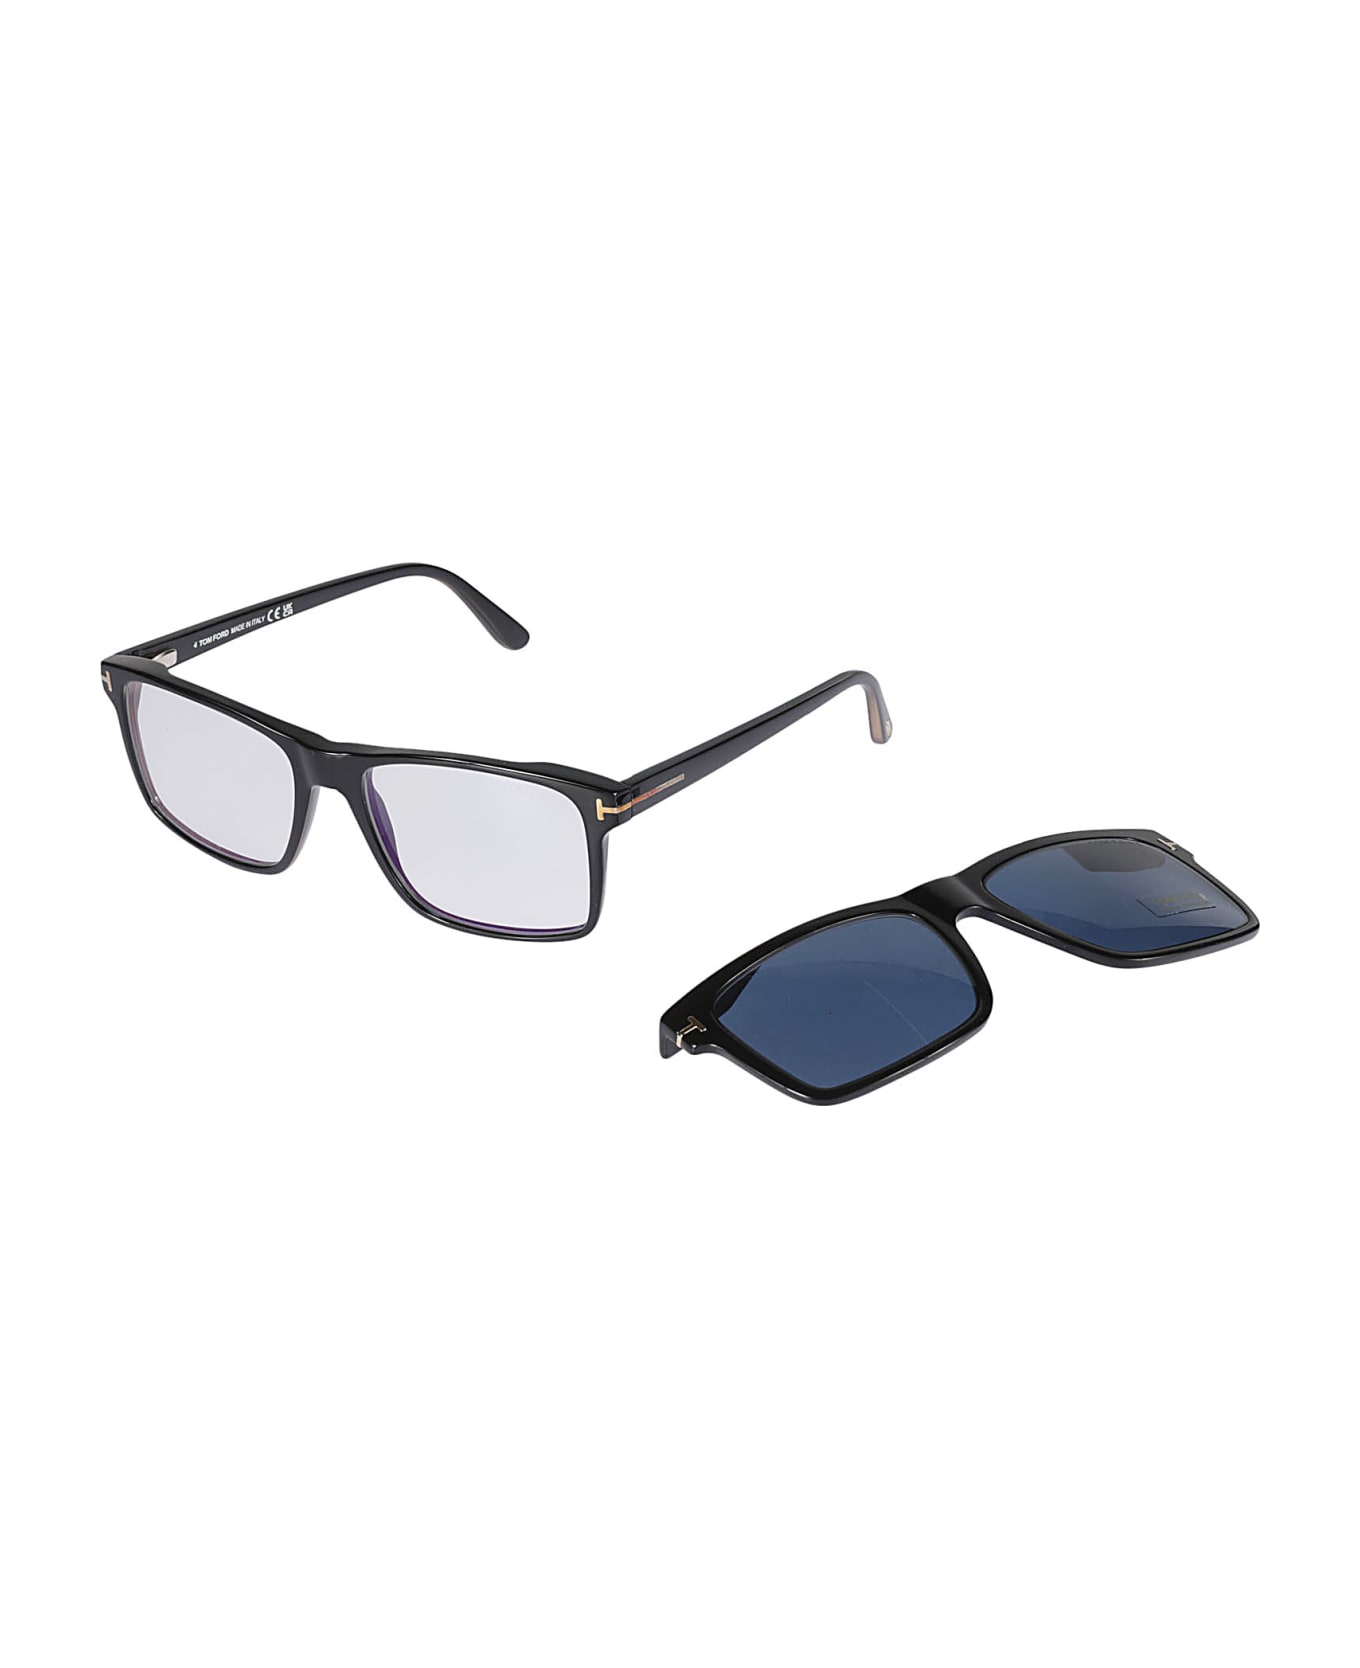 Tom Ford Eyewear T-plaque Glasses - 001 アイウェア